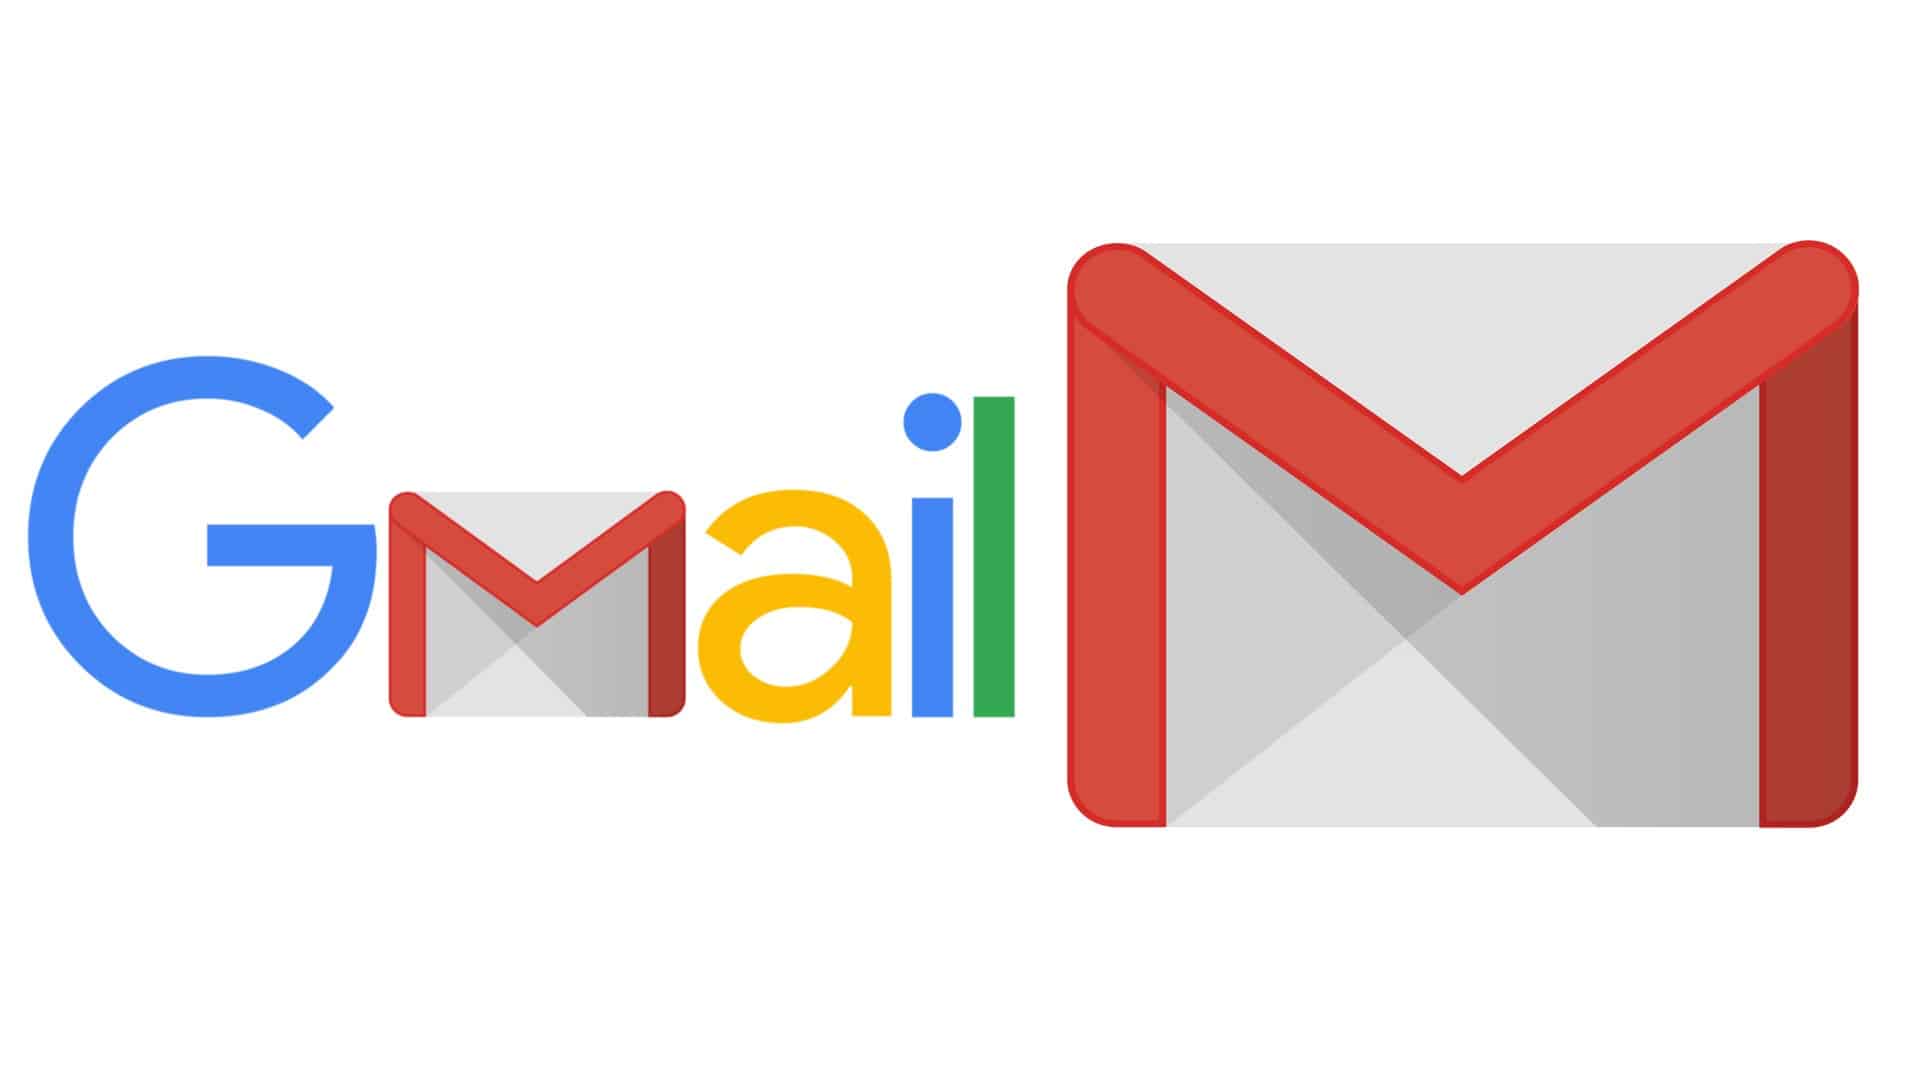 Keep an Eye on Gmail’s New Capabilities